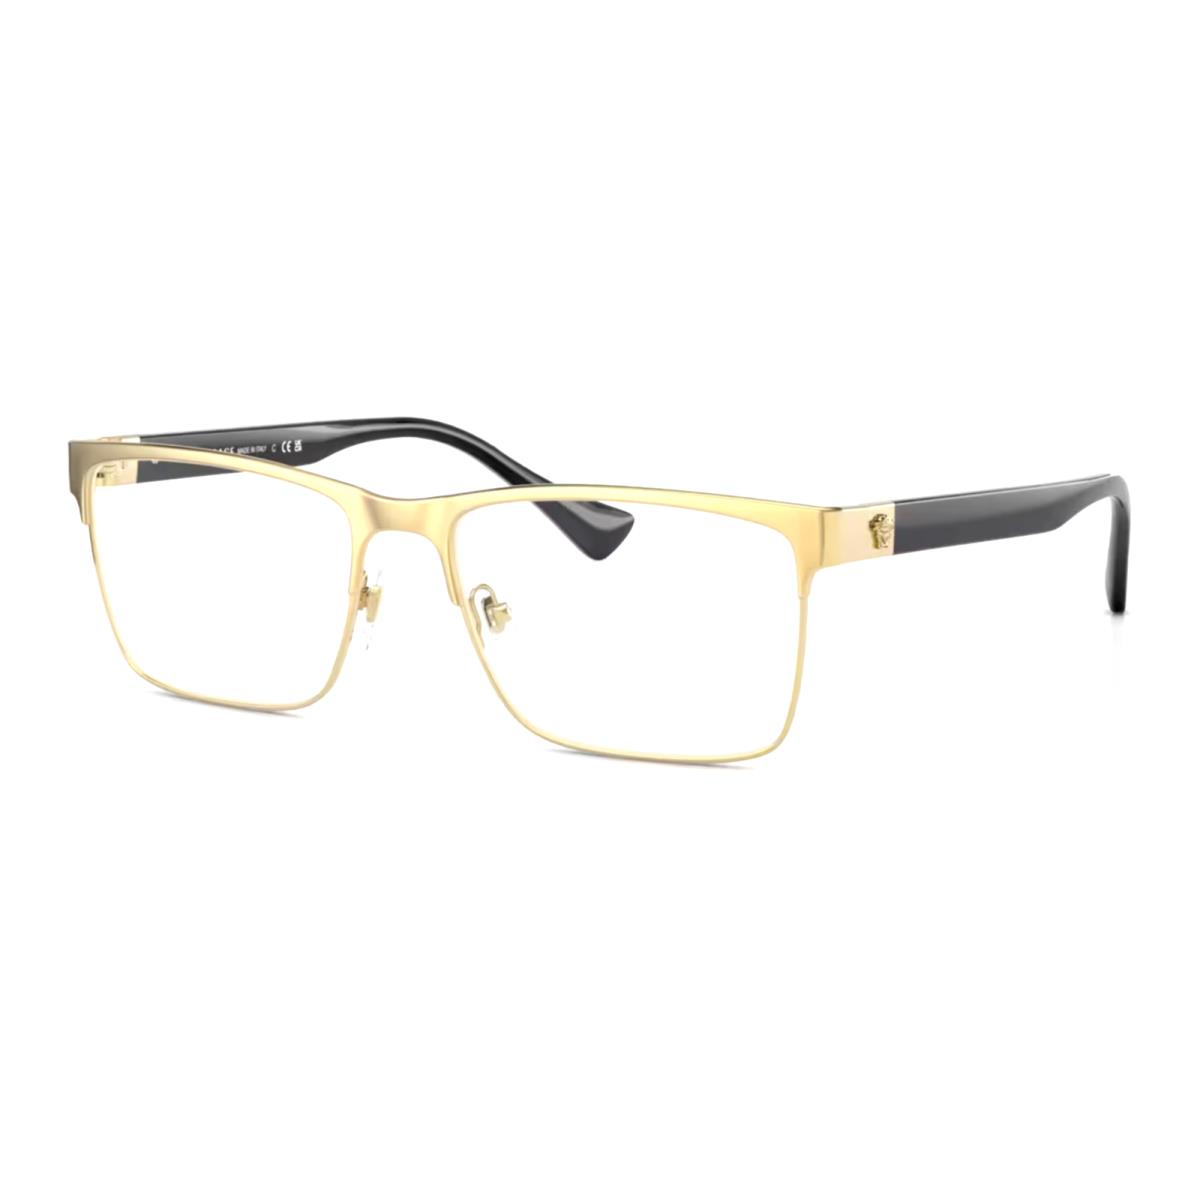 Versace Rx-able Eyeglasses Mod. 1285 1002 56-17 150 Gold Black Frames